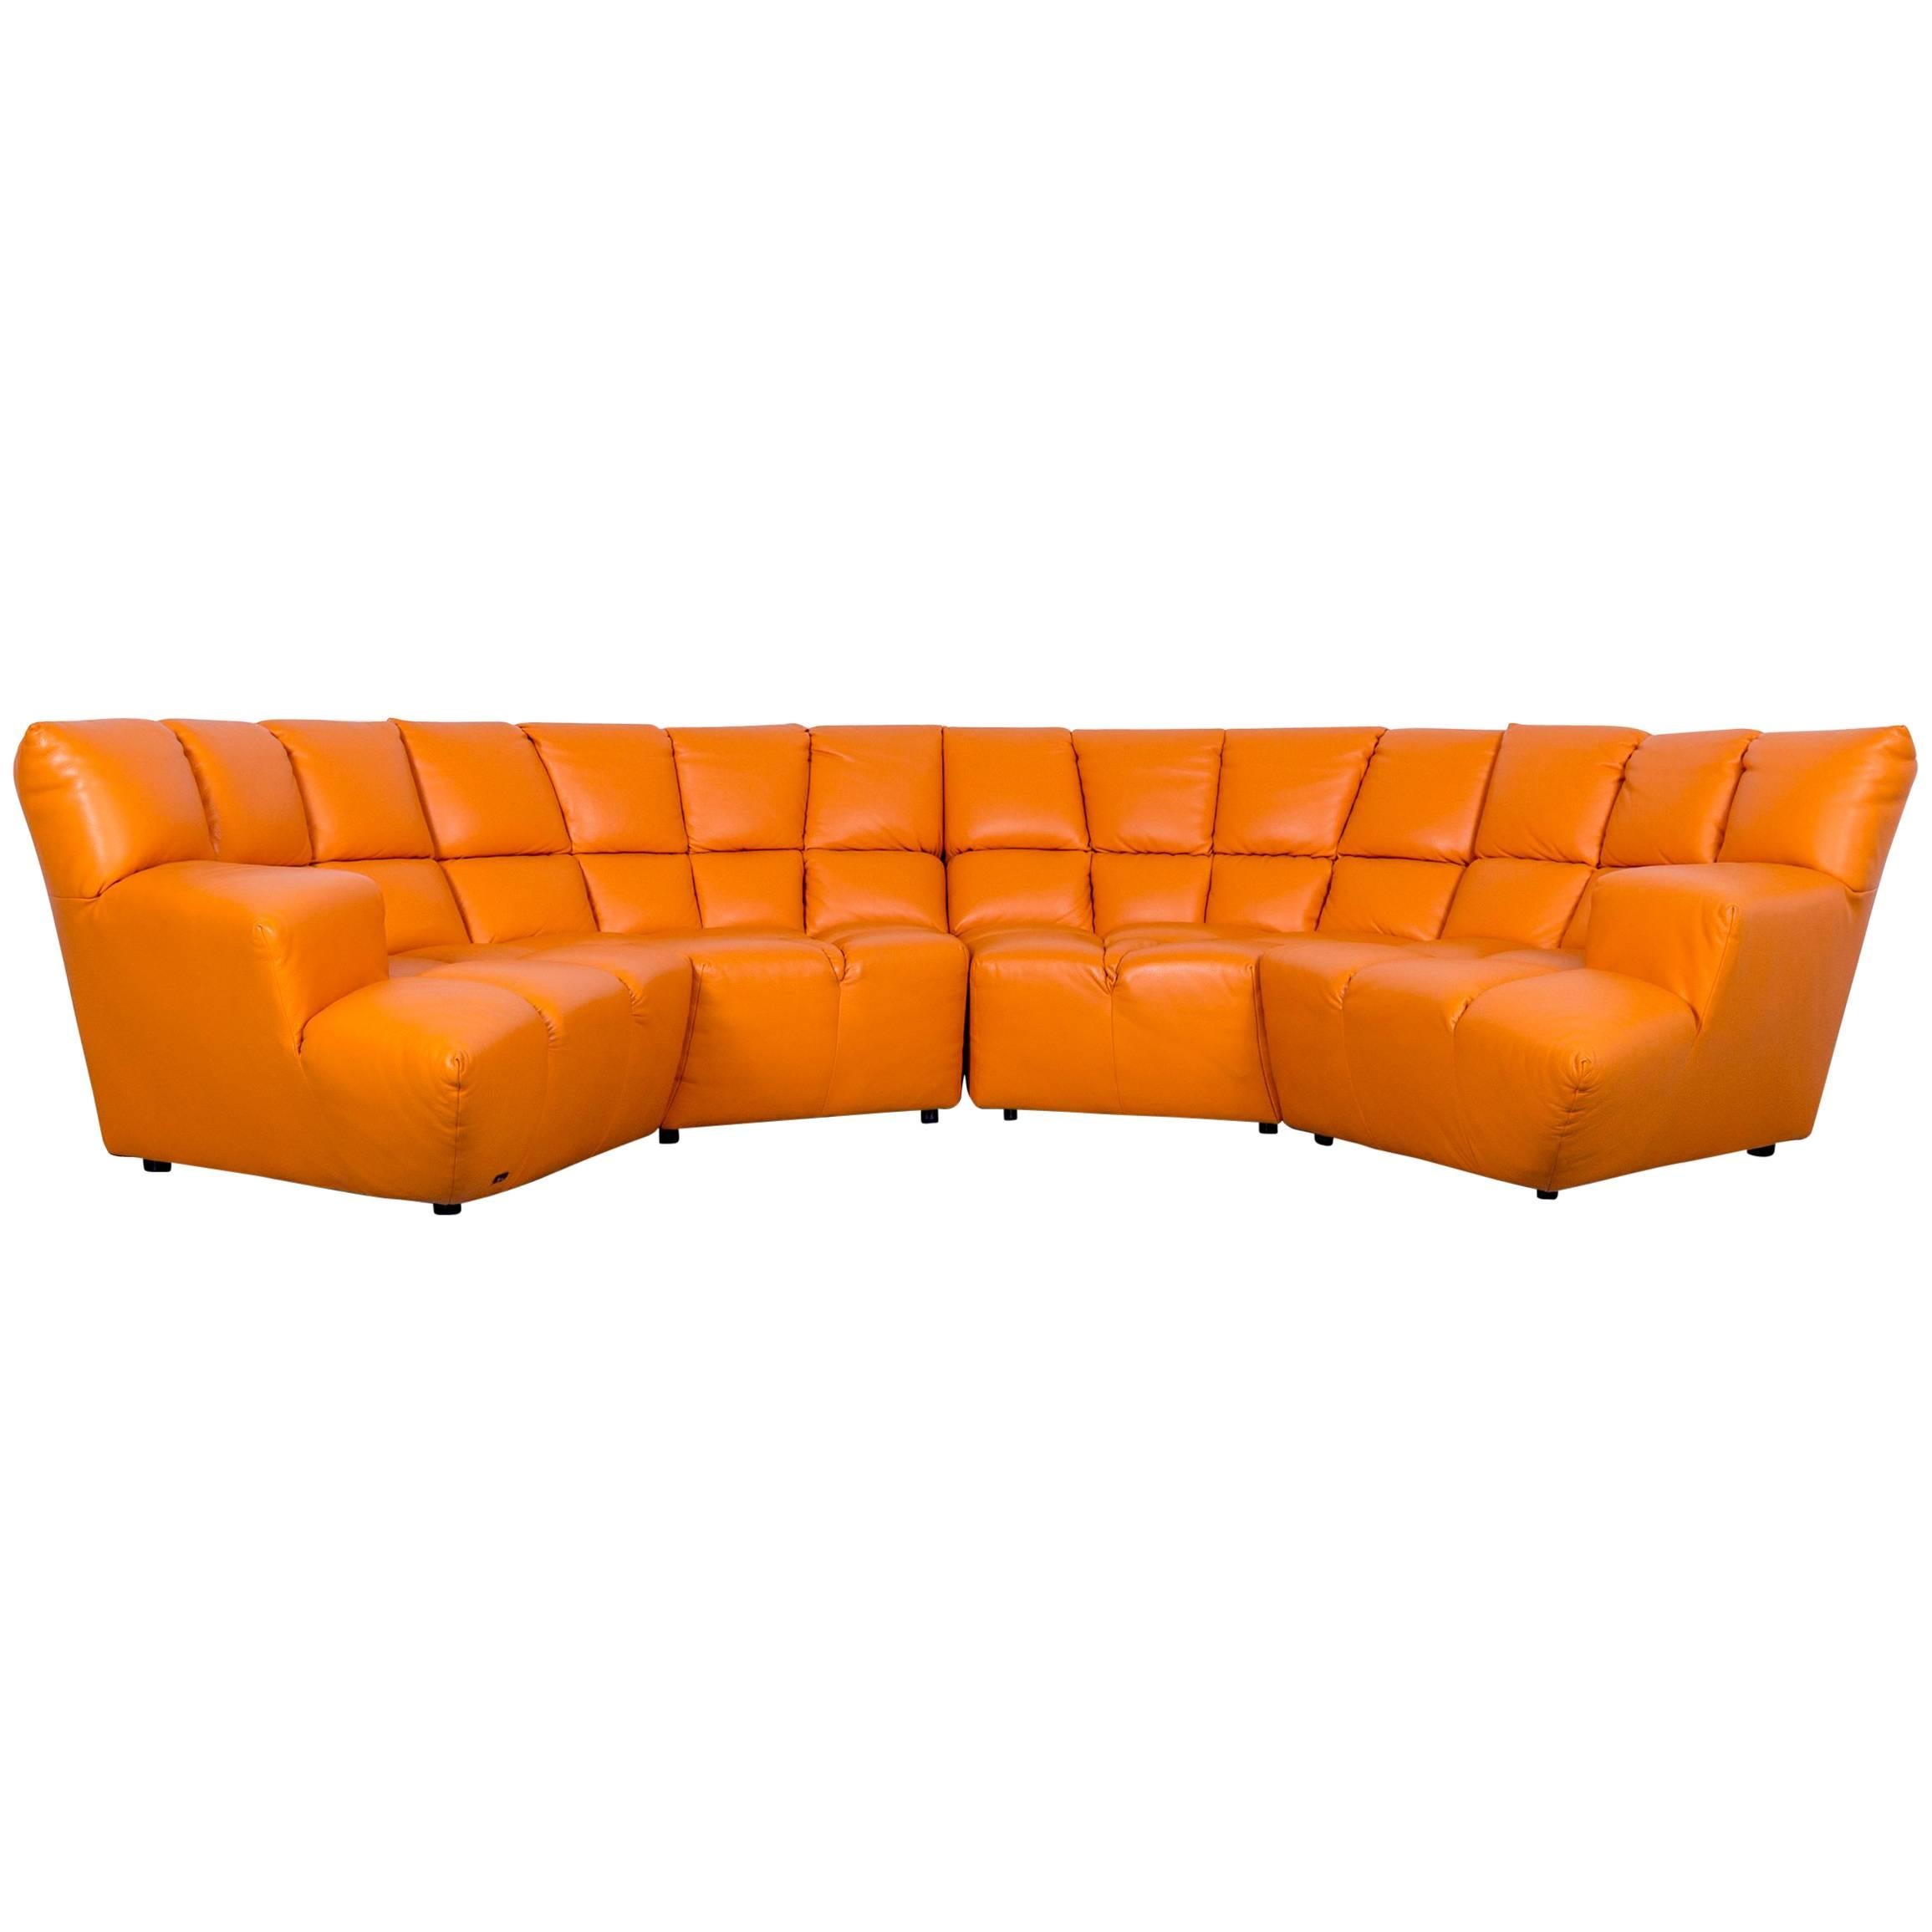 Bretz Cloud 7 Designer Cornersofa Orange Leather Couch 